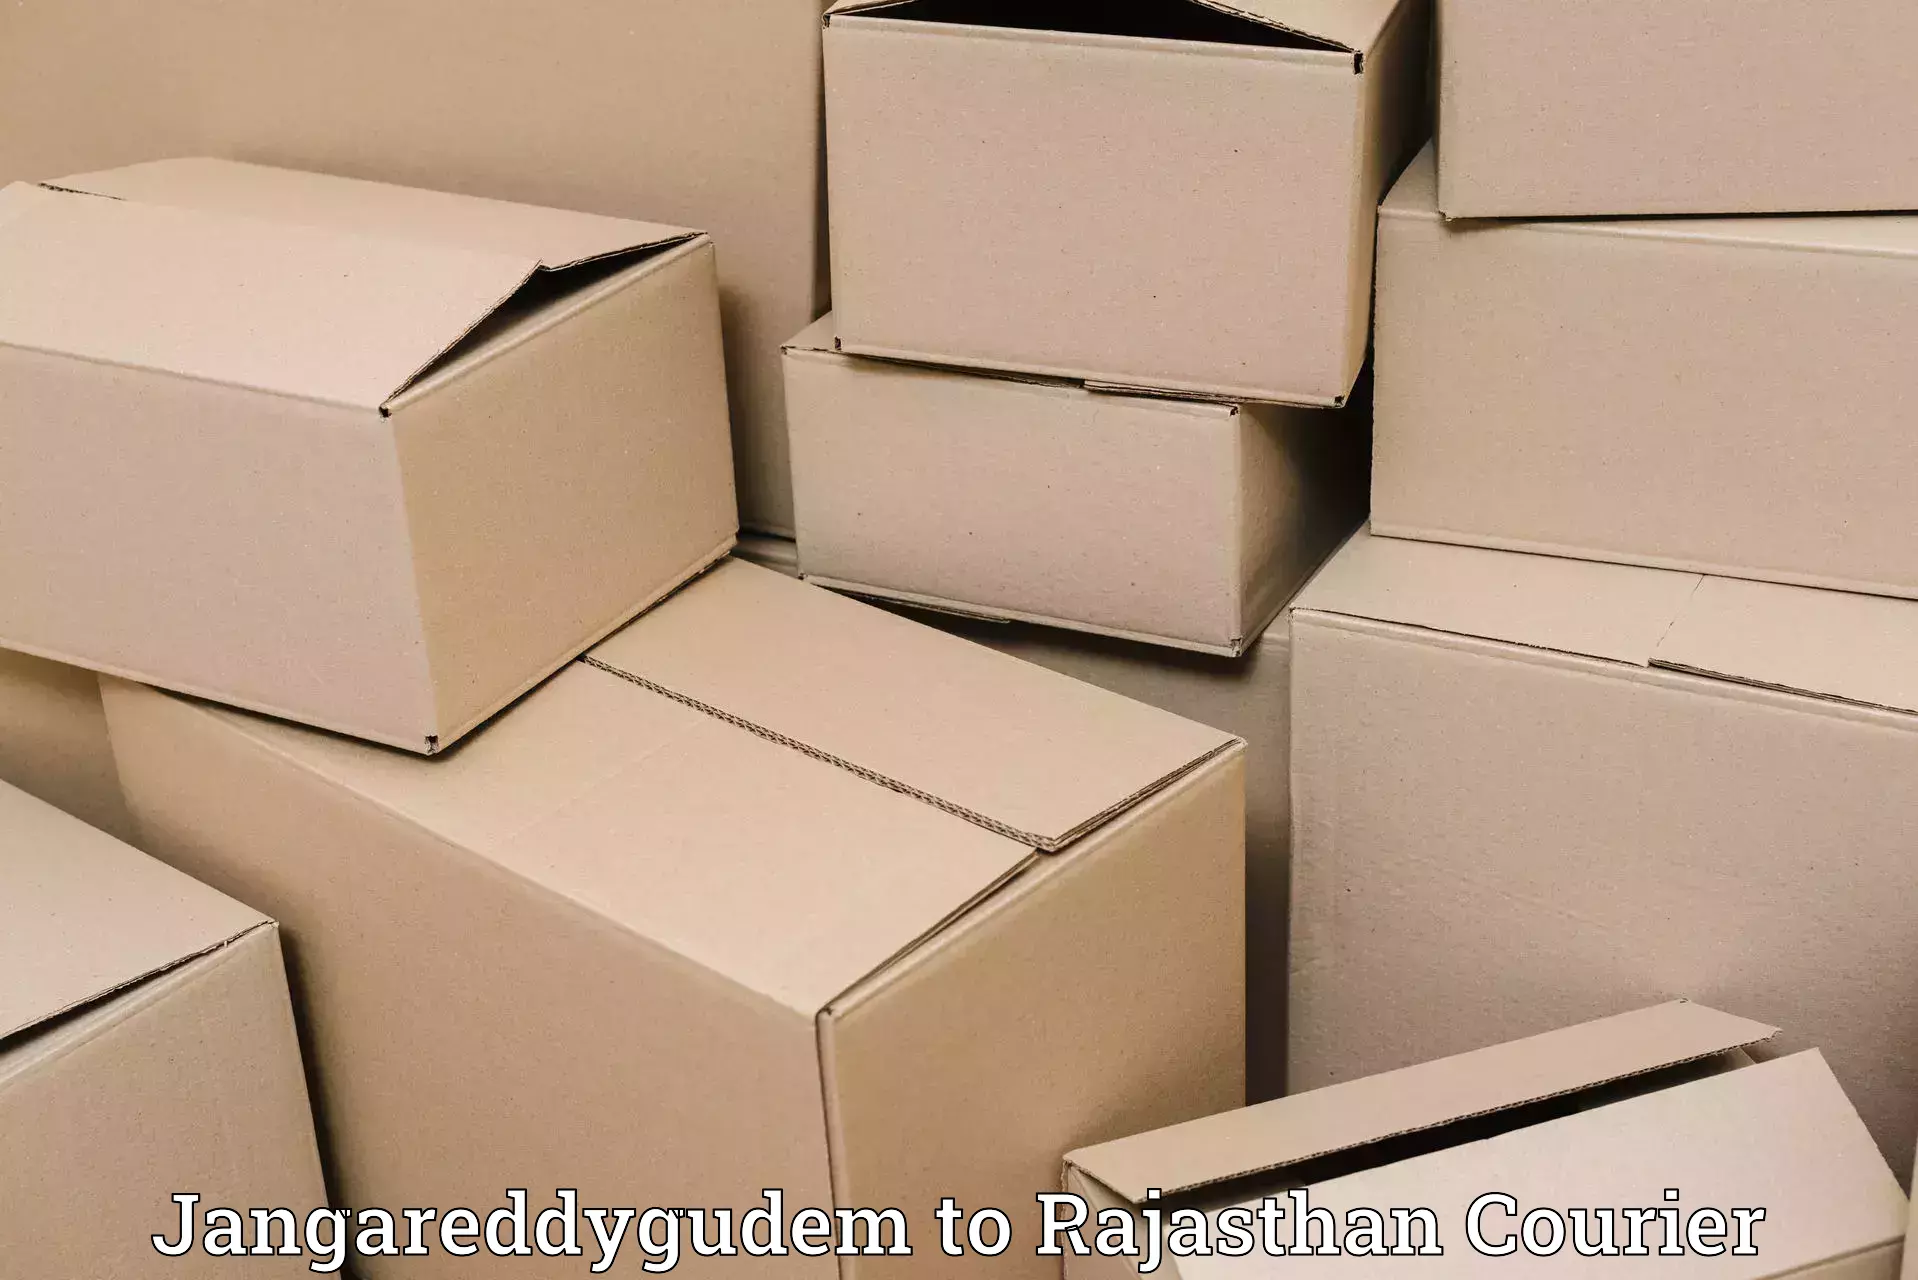 High-speed parcel service Jangareddygudem to Khinwara